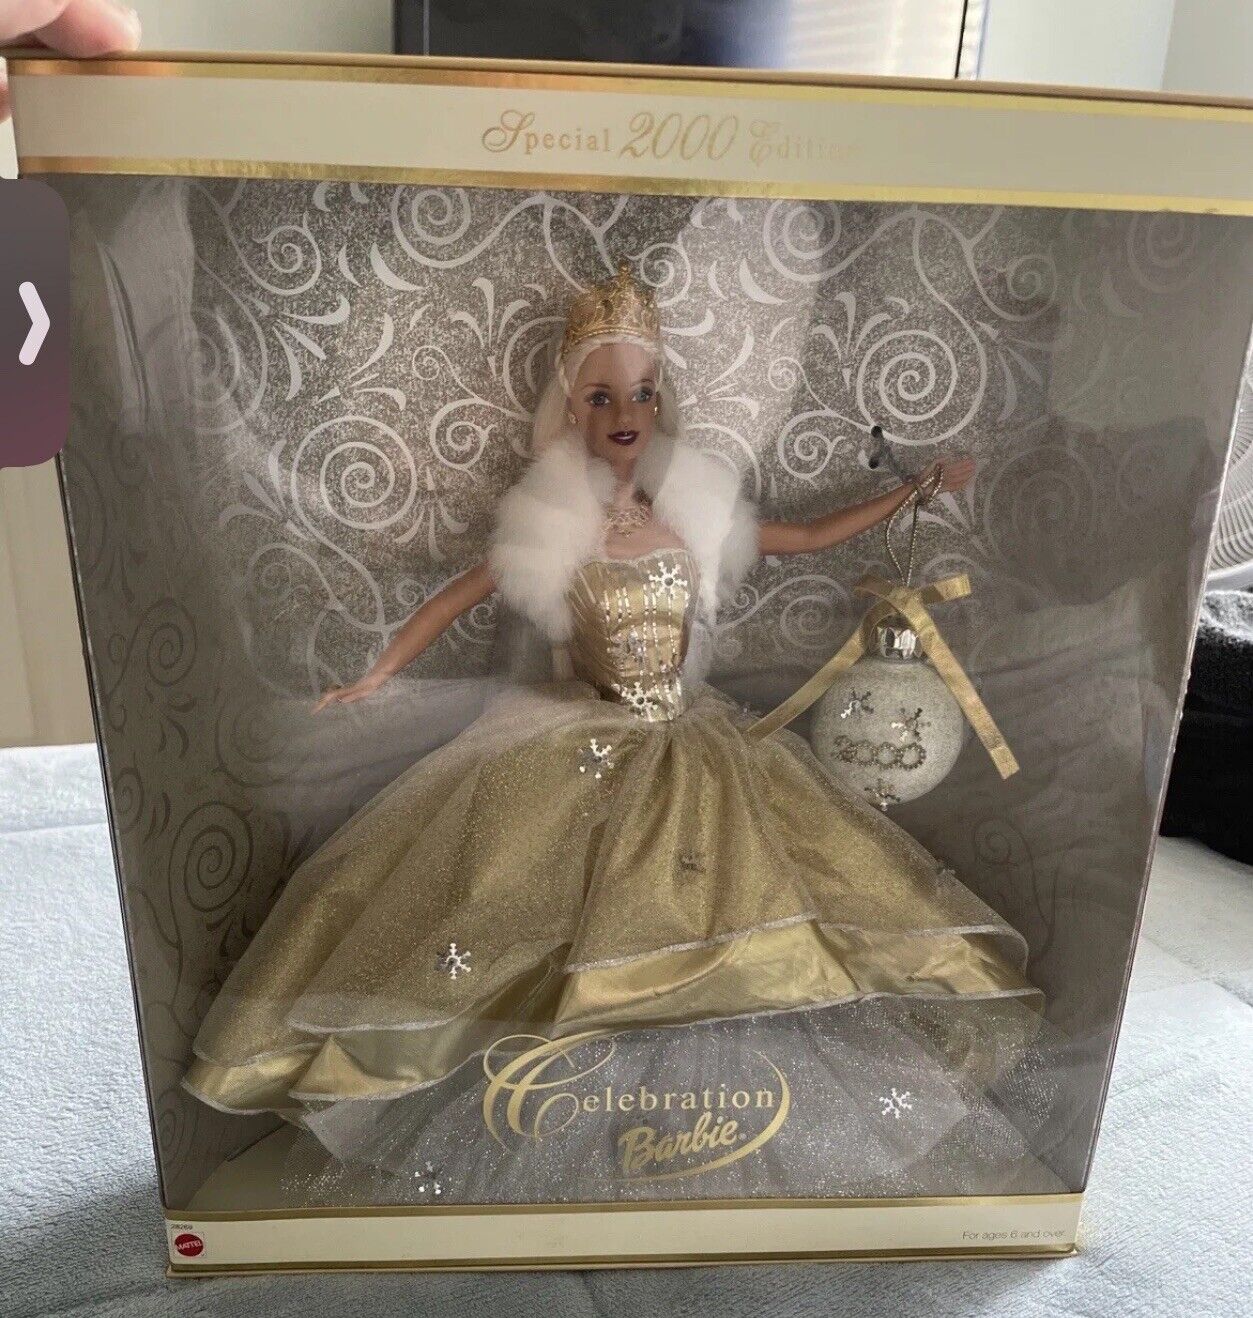  2000 Edition Mattel Celebration Barbie Doll Holiday Unopened Rare